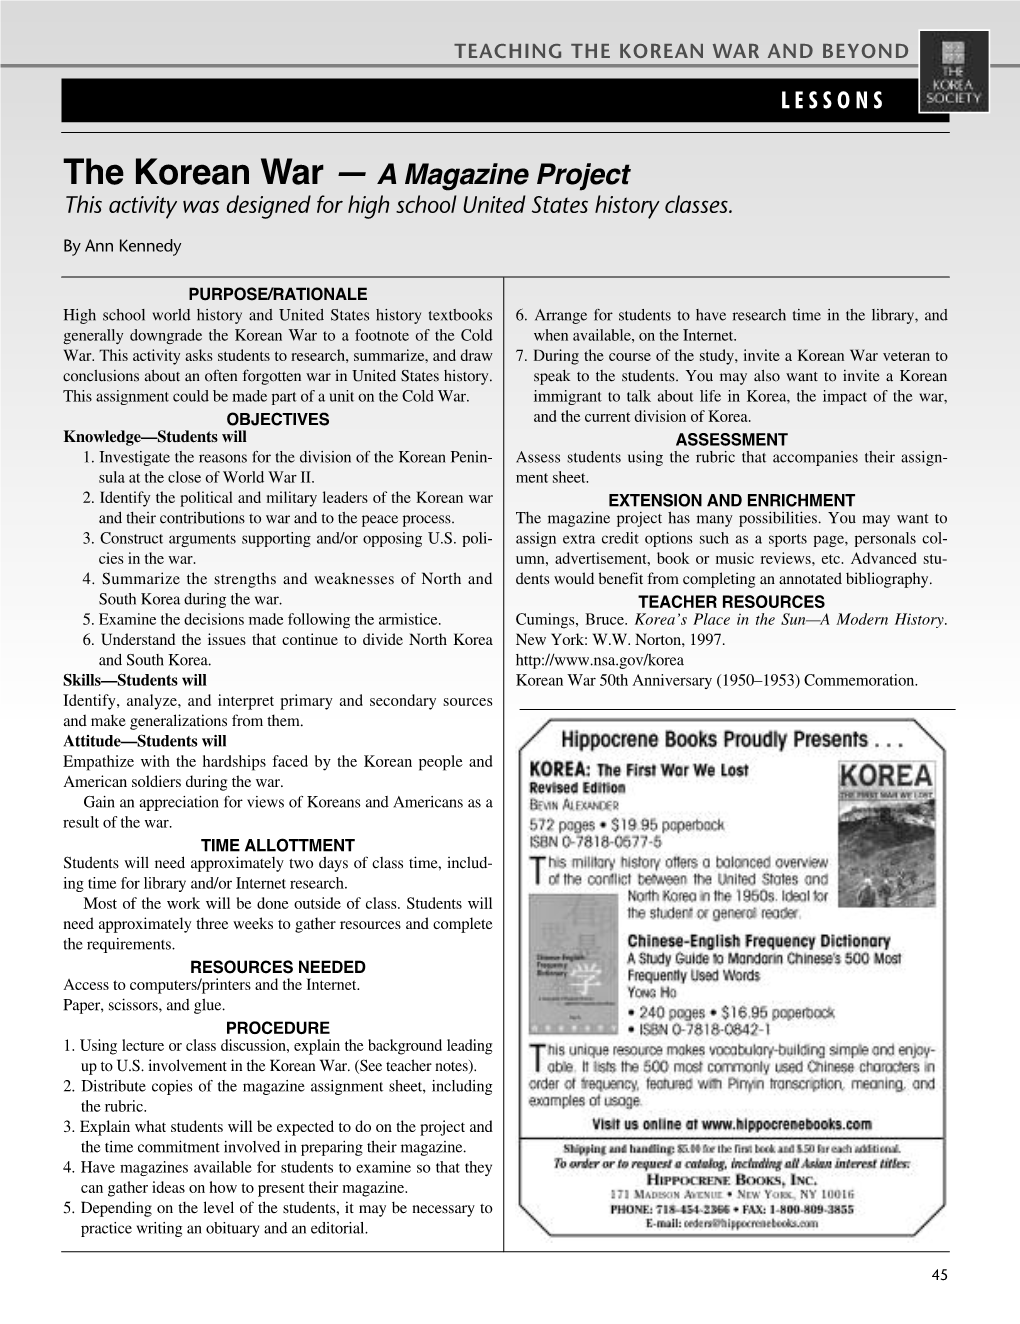 The Korean War and Beyond